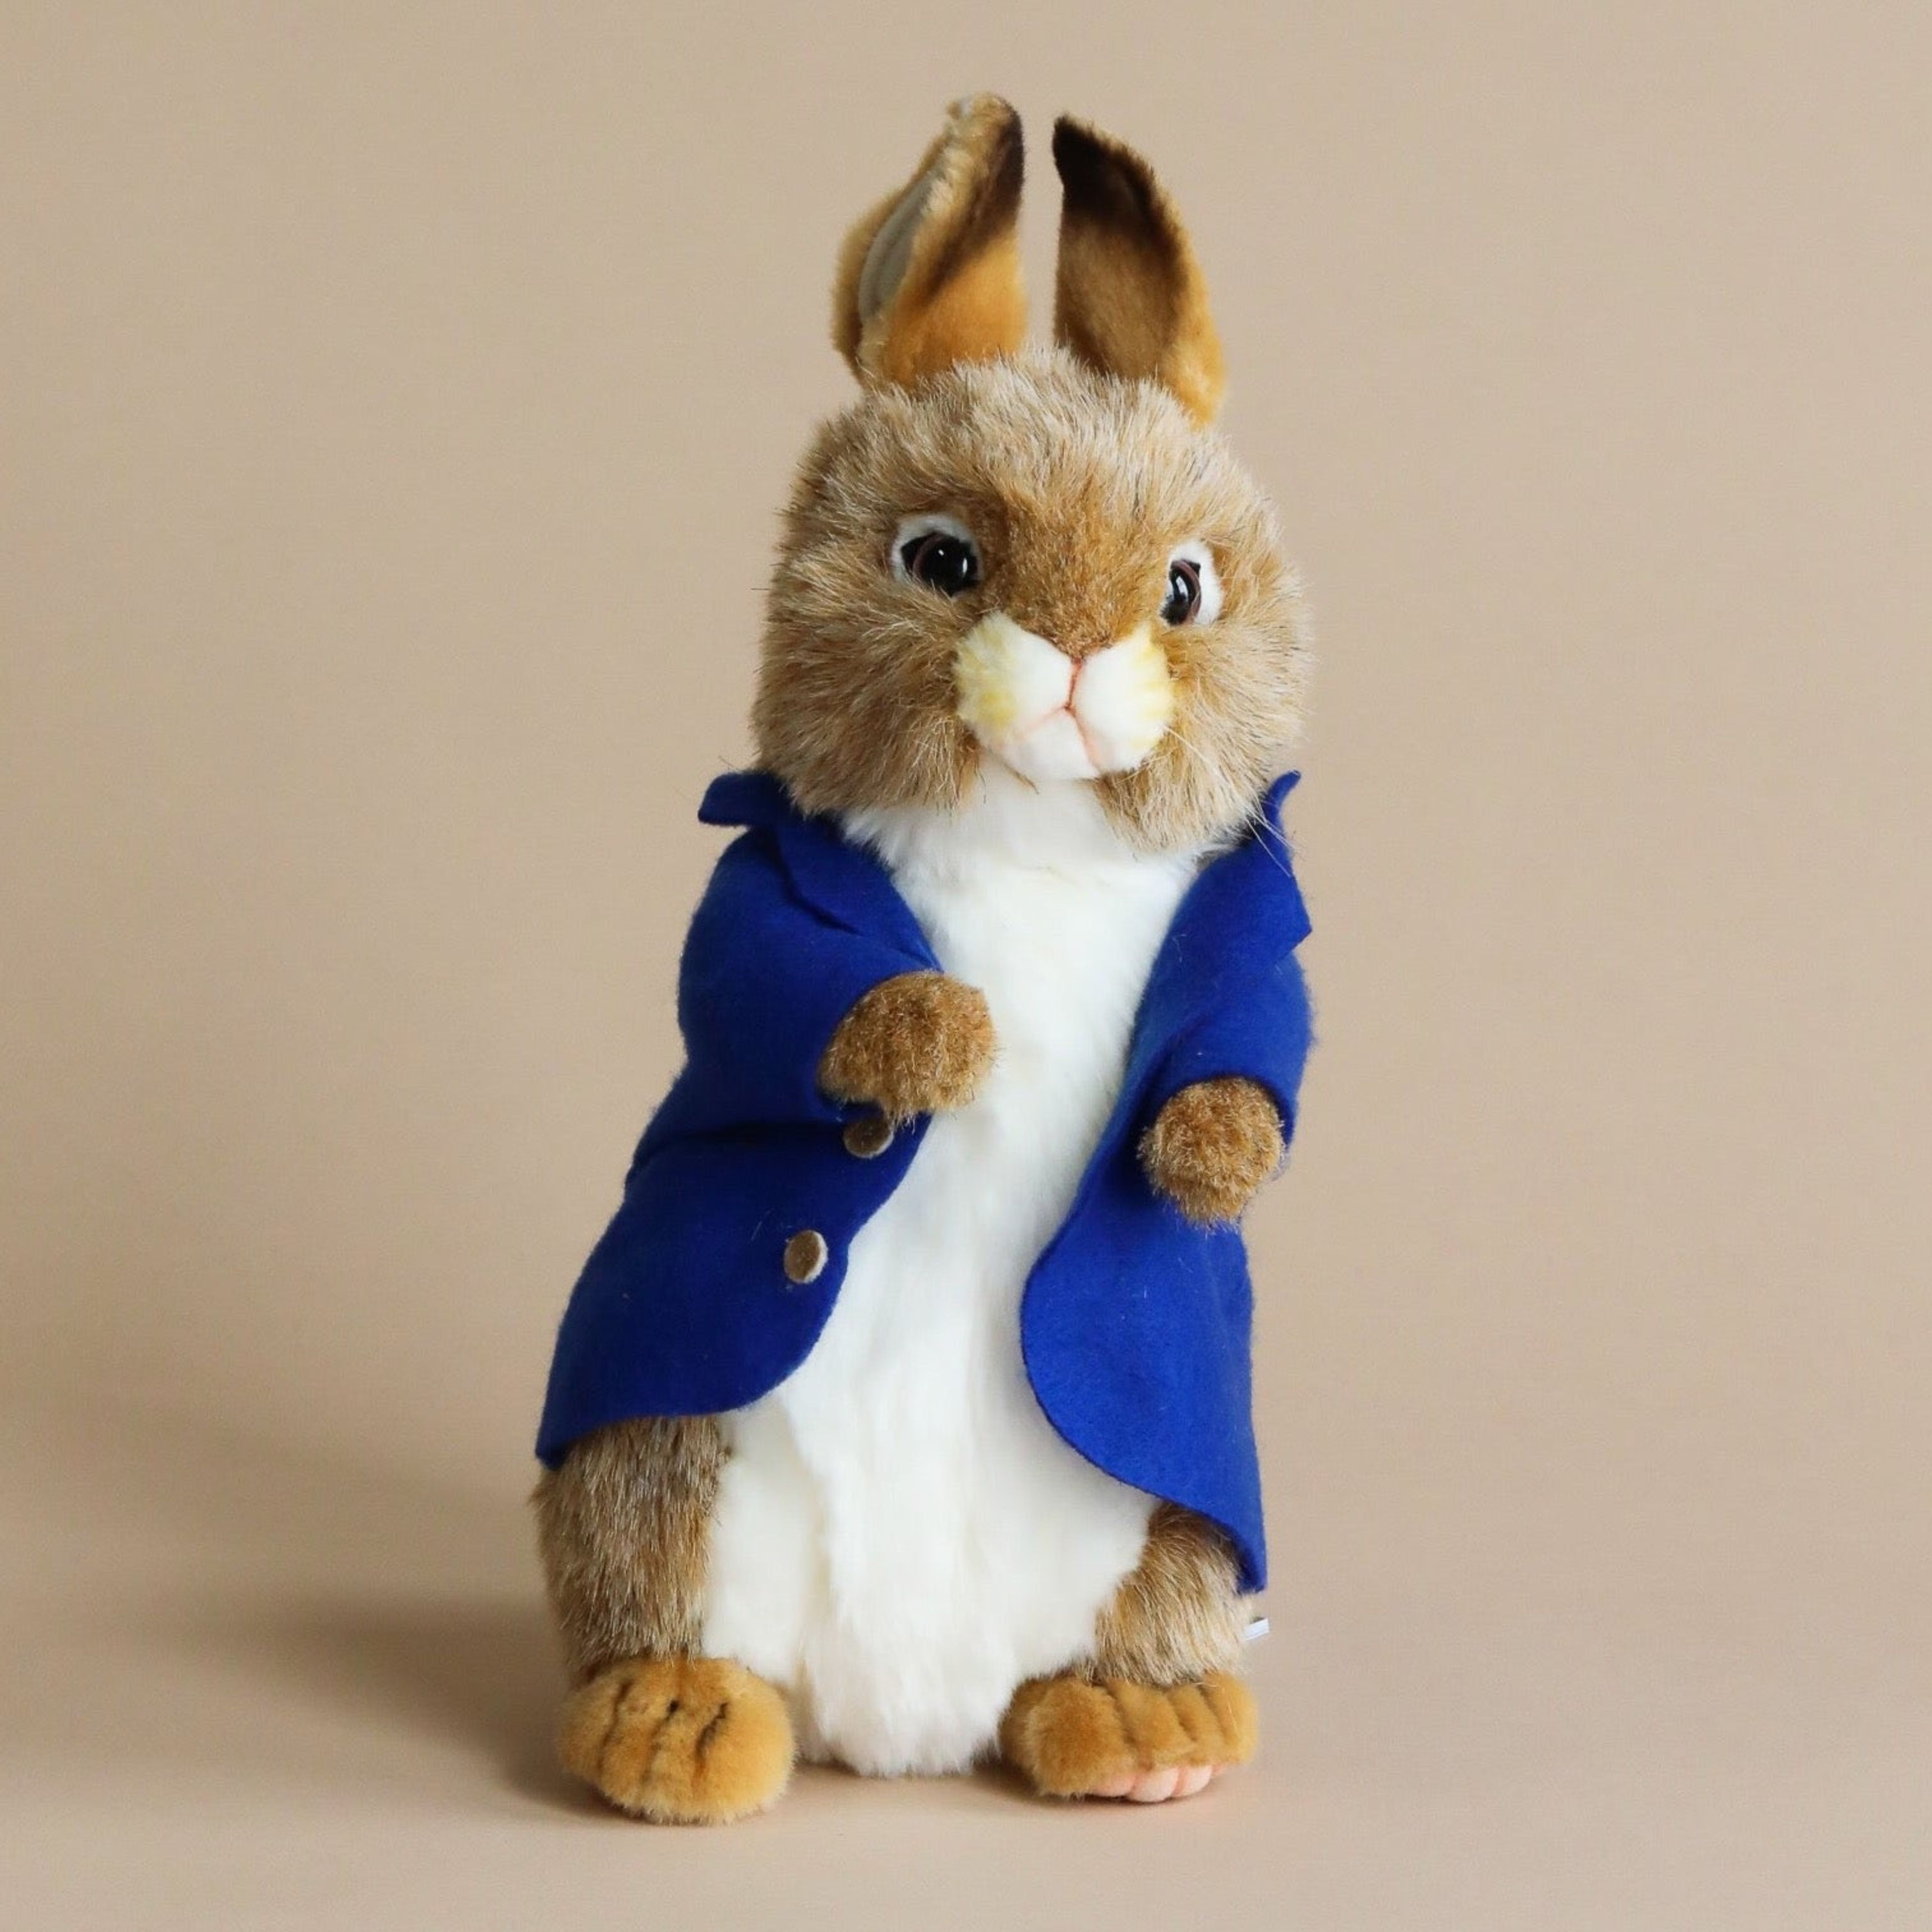 Blue Jacket Bunny Stuffed Animal